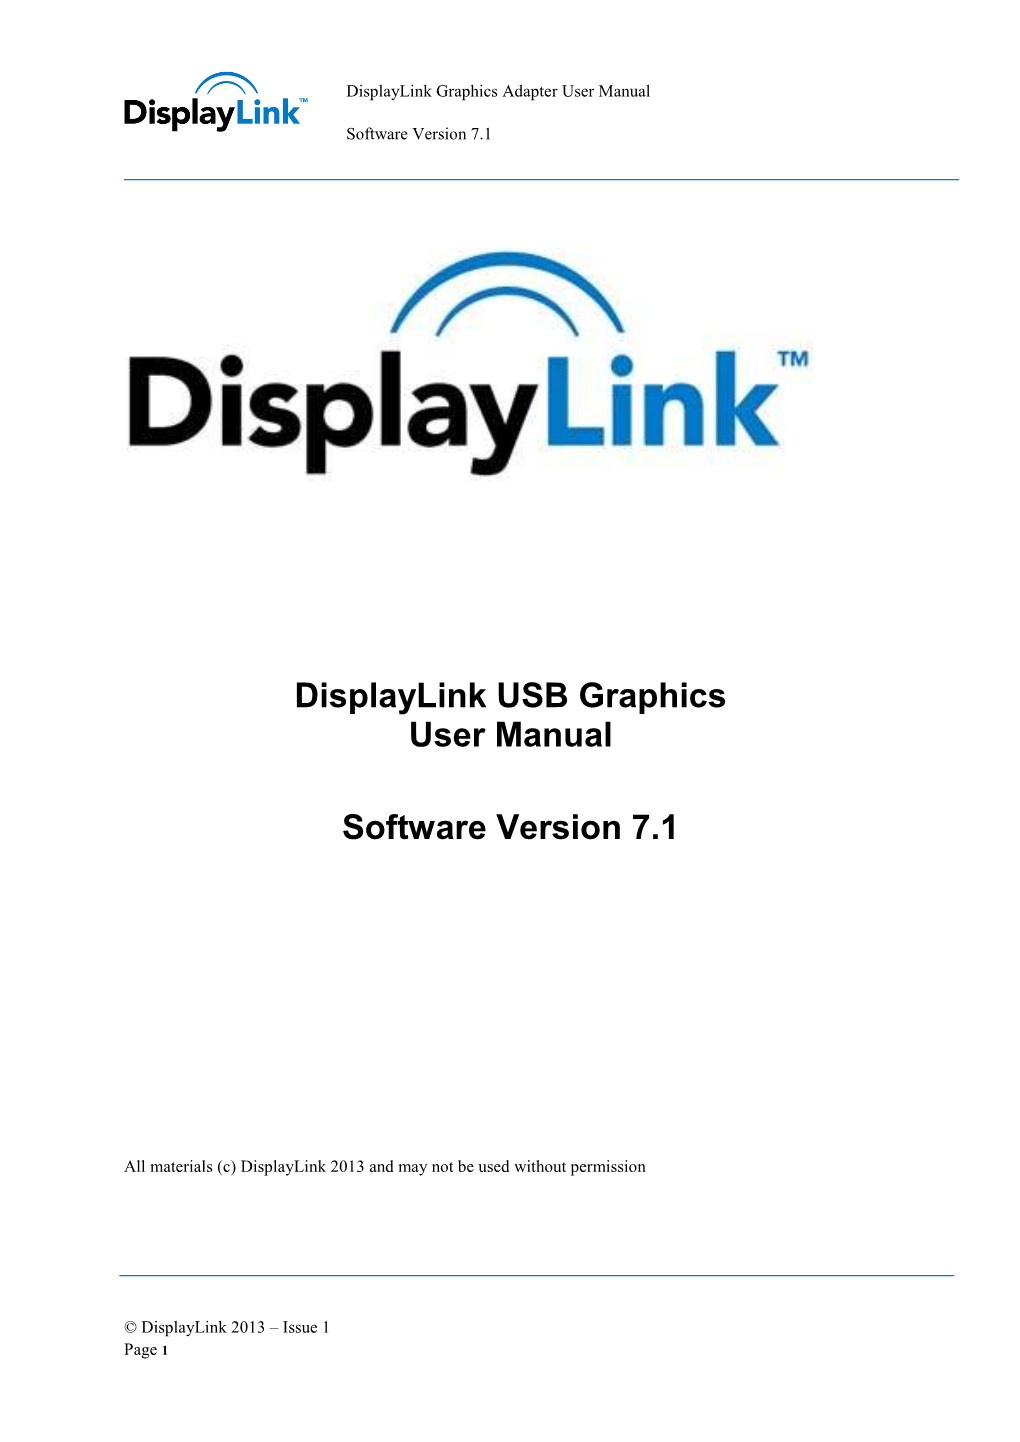 Displaylink USB Graphics User Manual Software Version